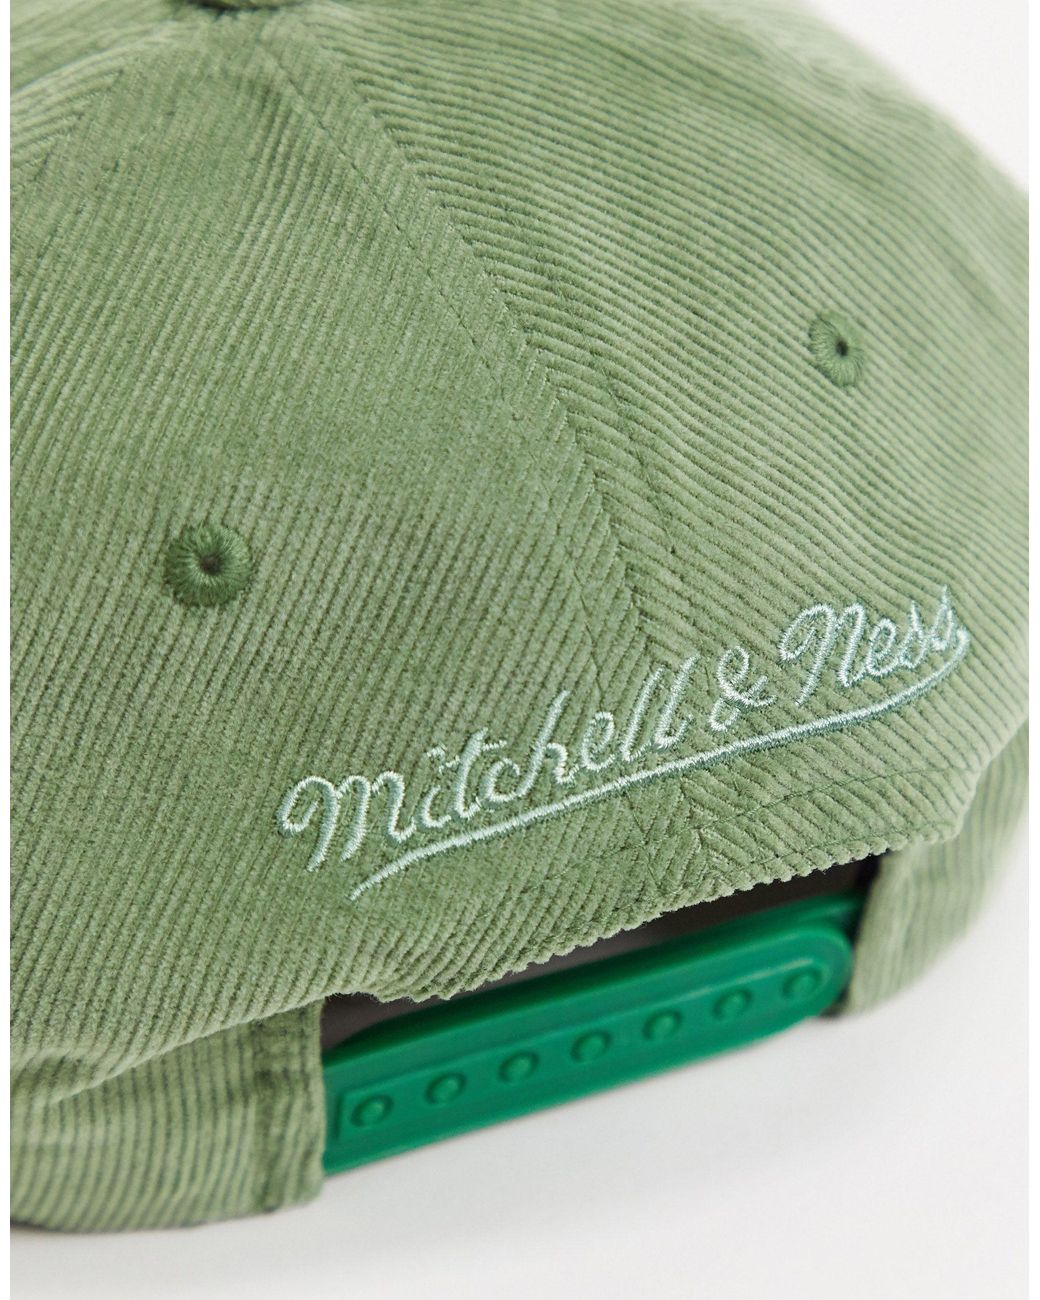 Mitchell & Ness Boston Celtics Corduroy Snapback Hat